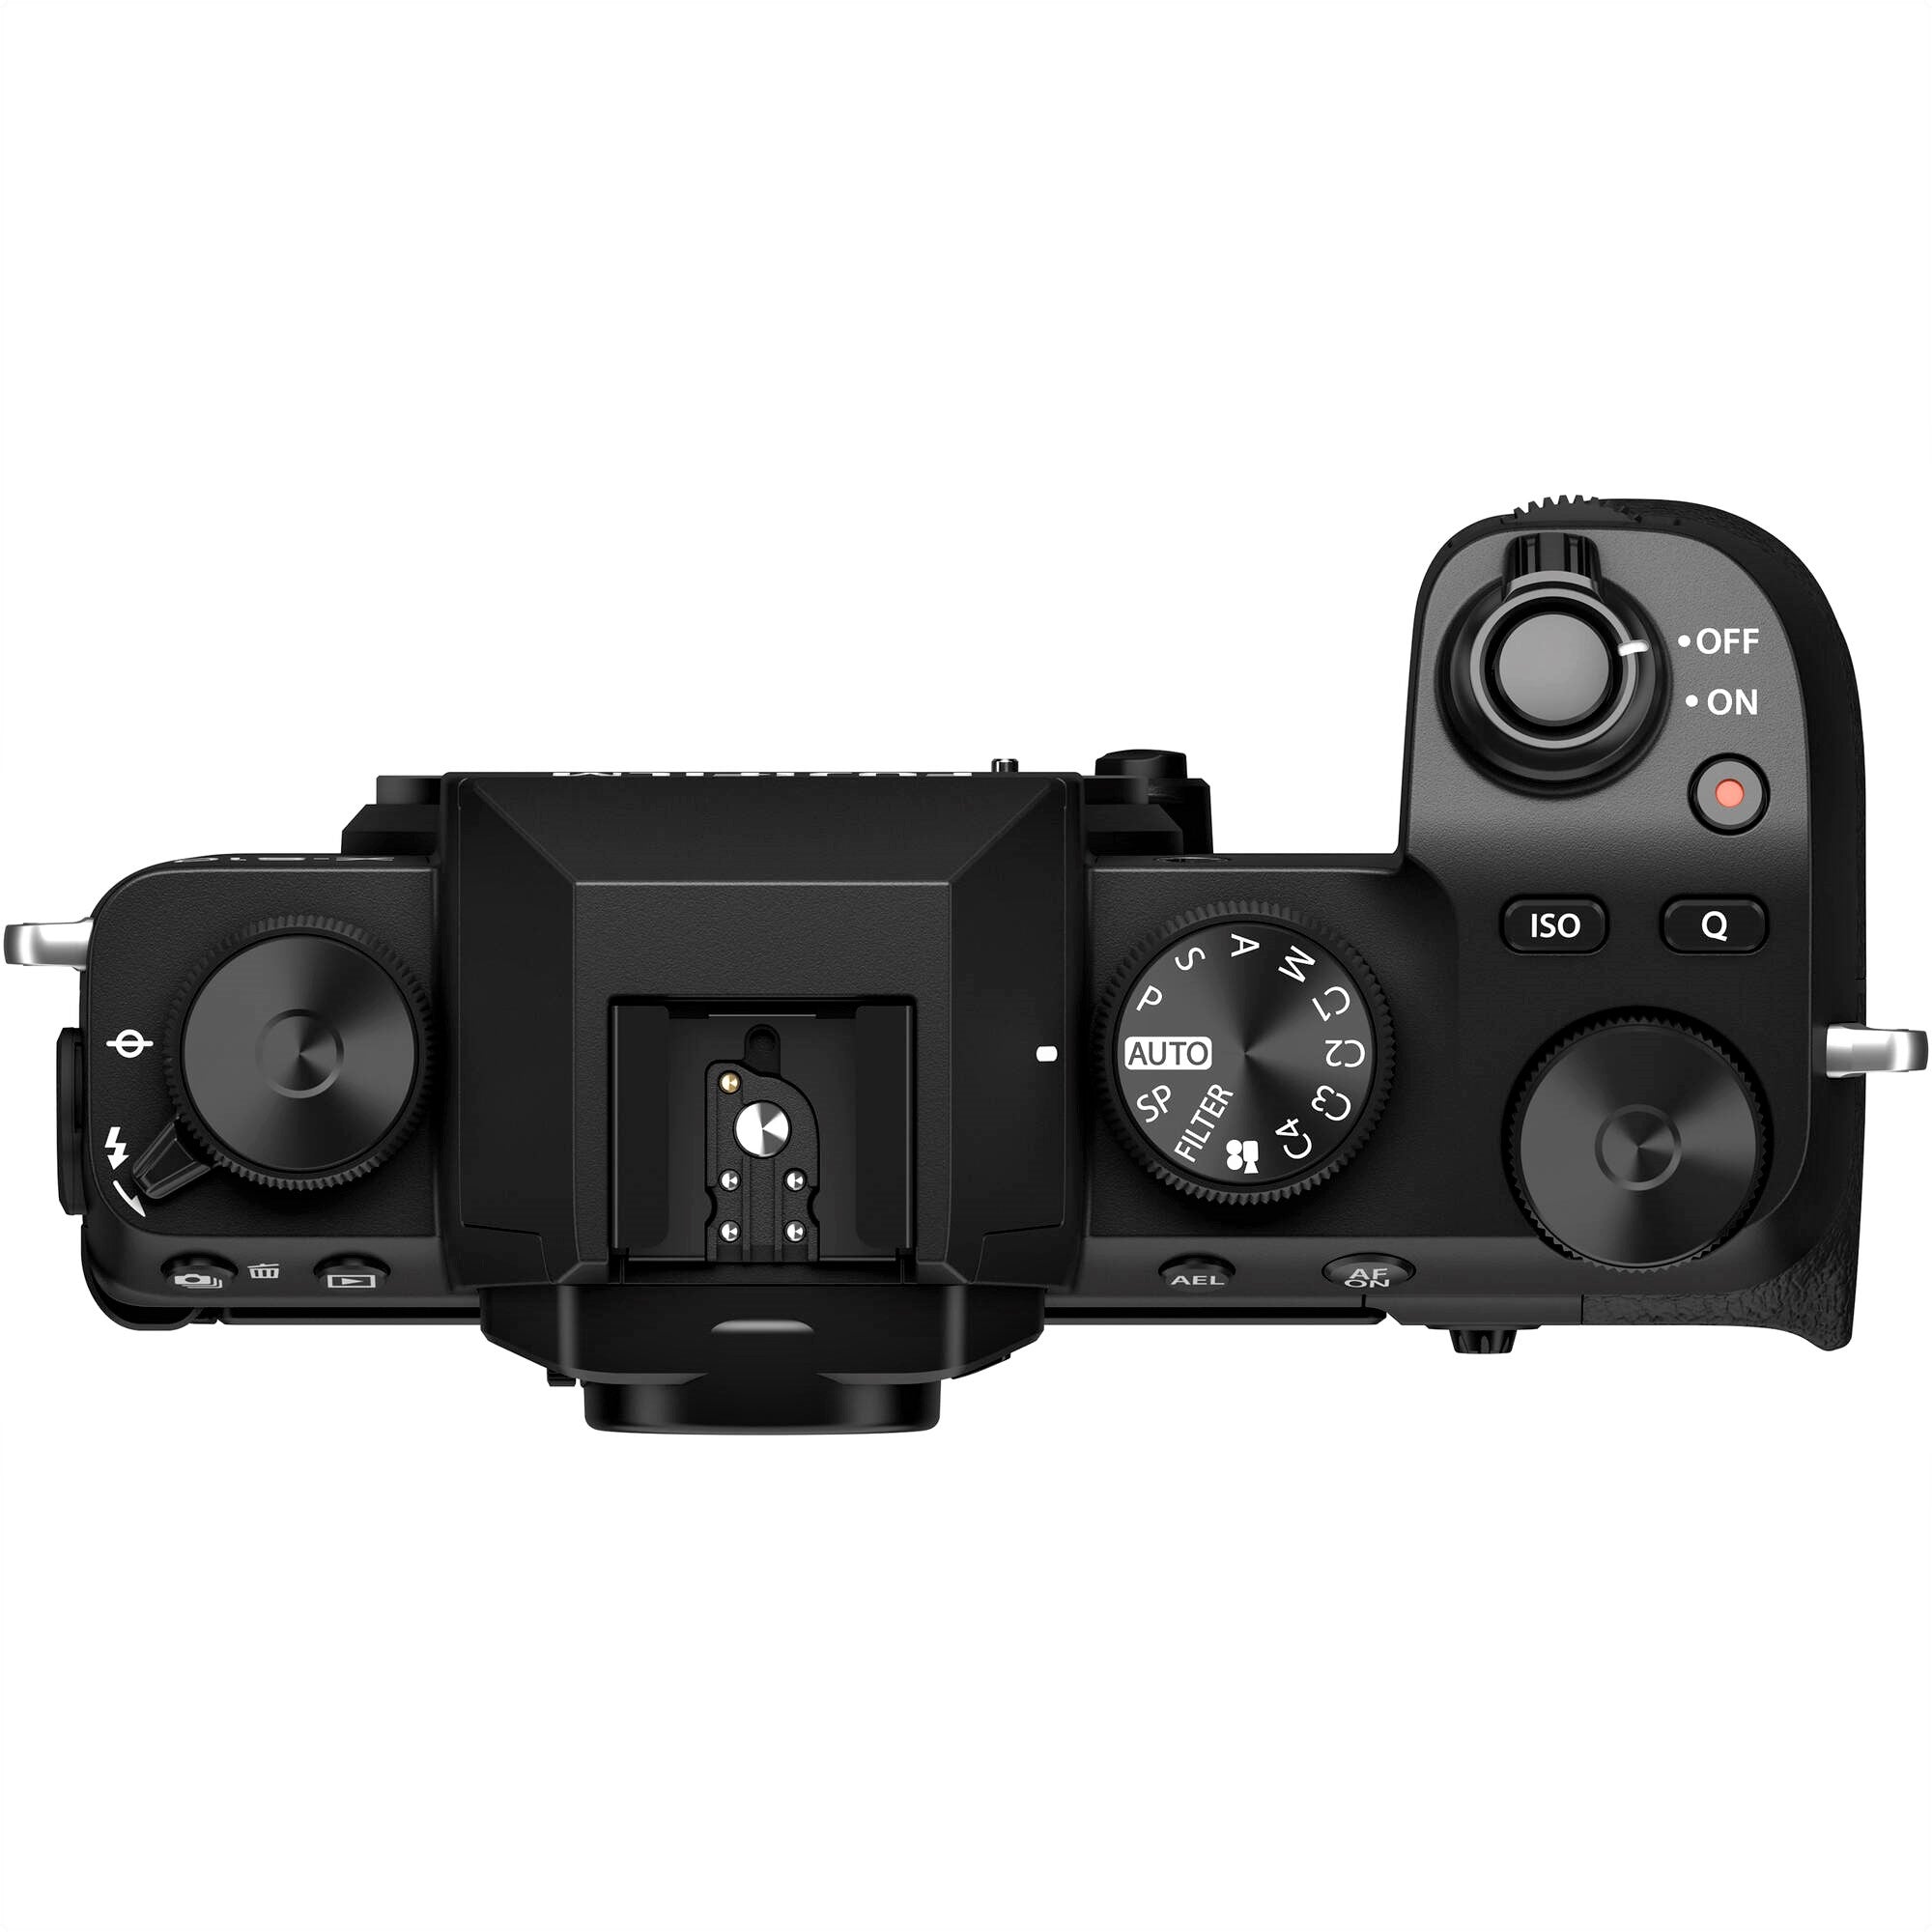 Fujifilm X-S10 Mirrorless Camera - Top View